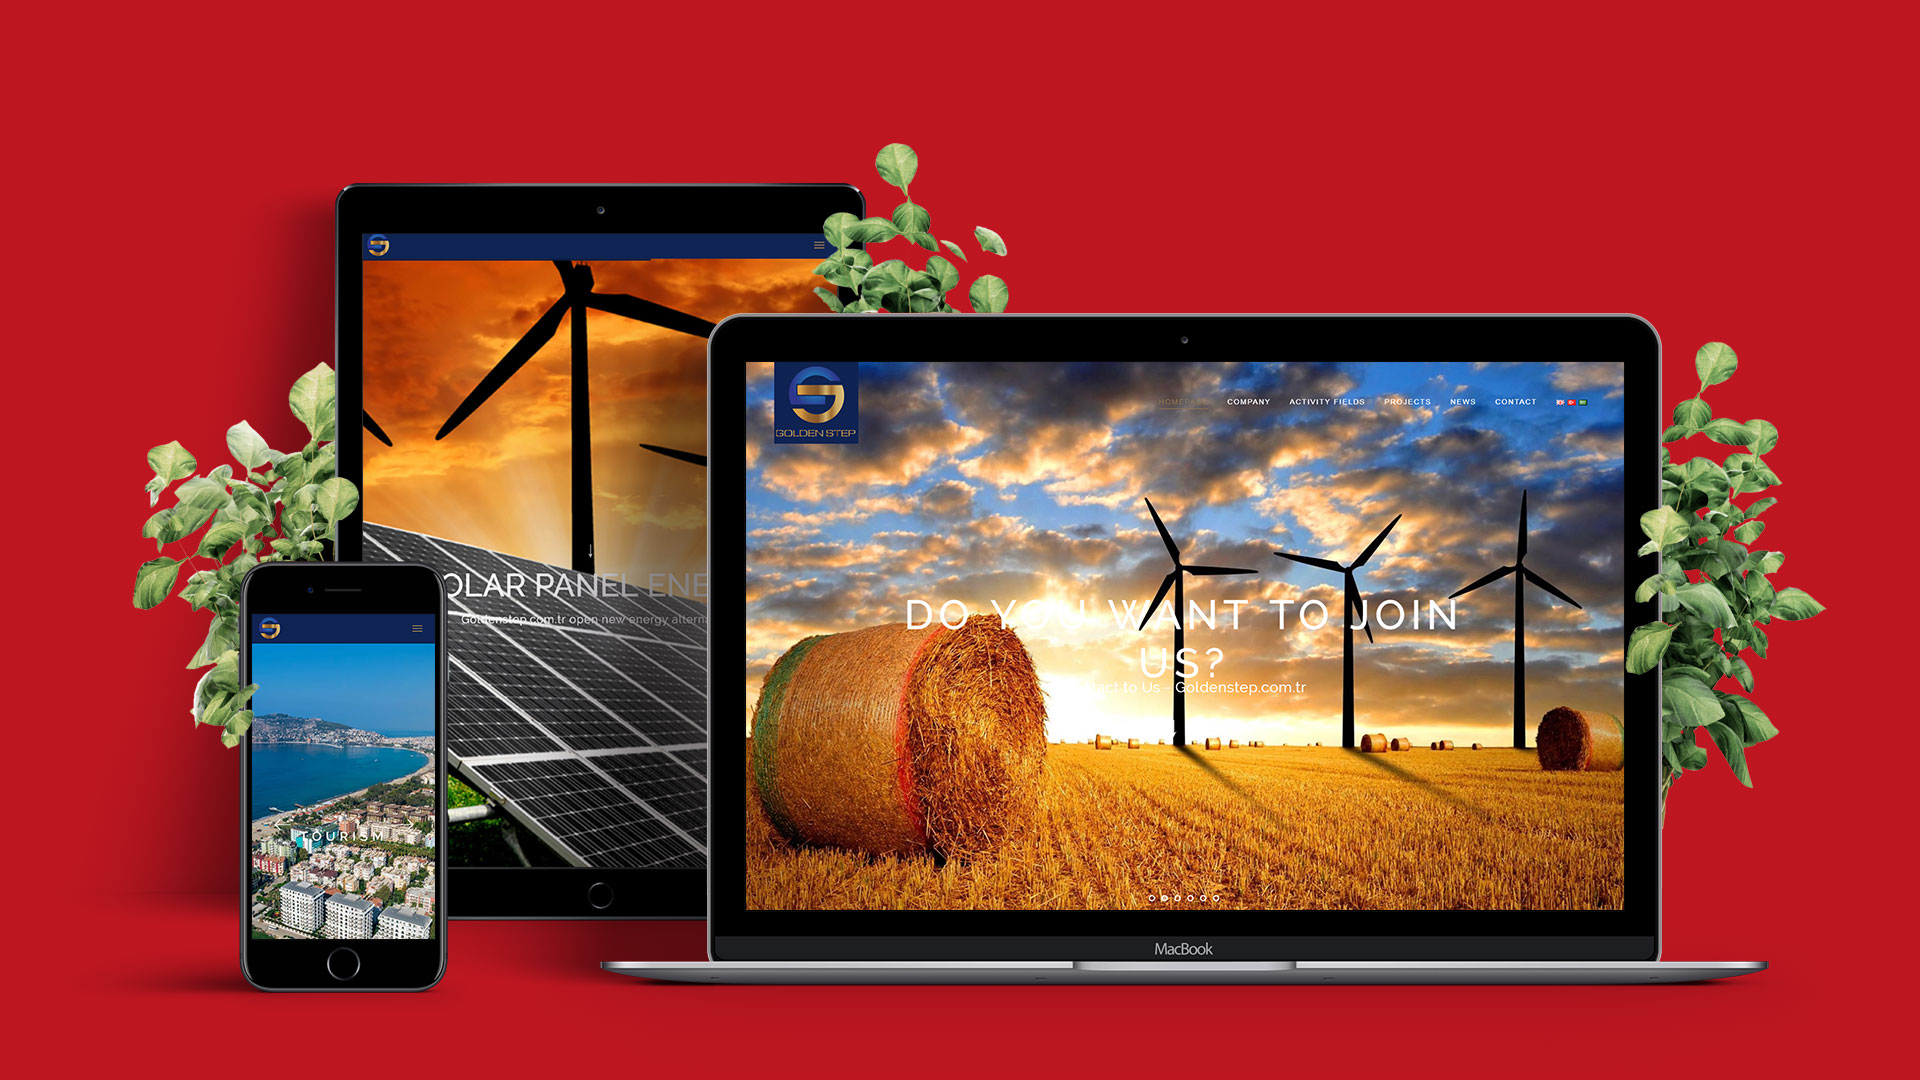 webfili-goldenstep-الطاقة-الزراعة-السياحة-ألانيا-01.jpg